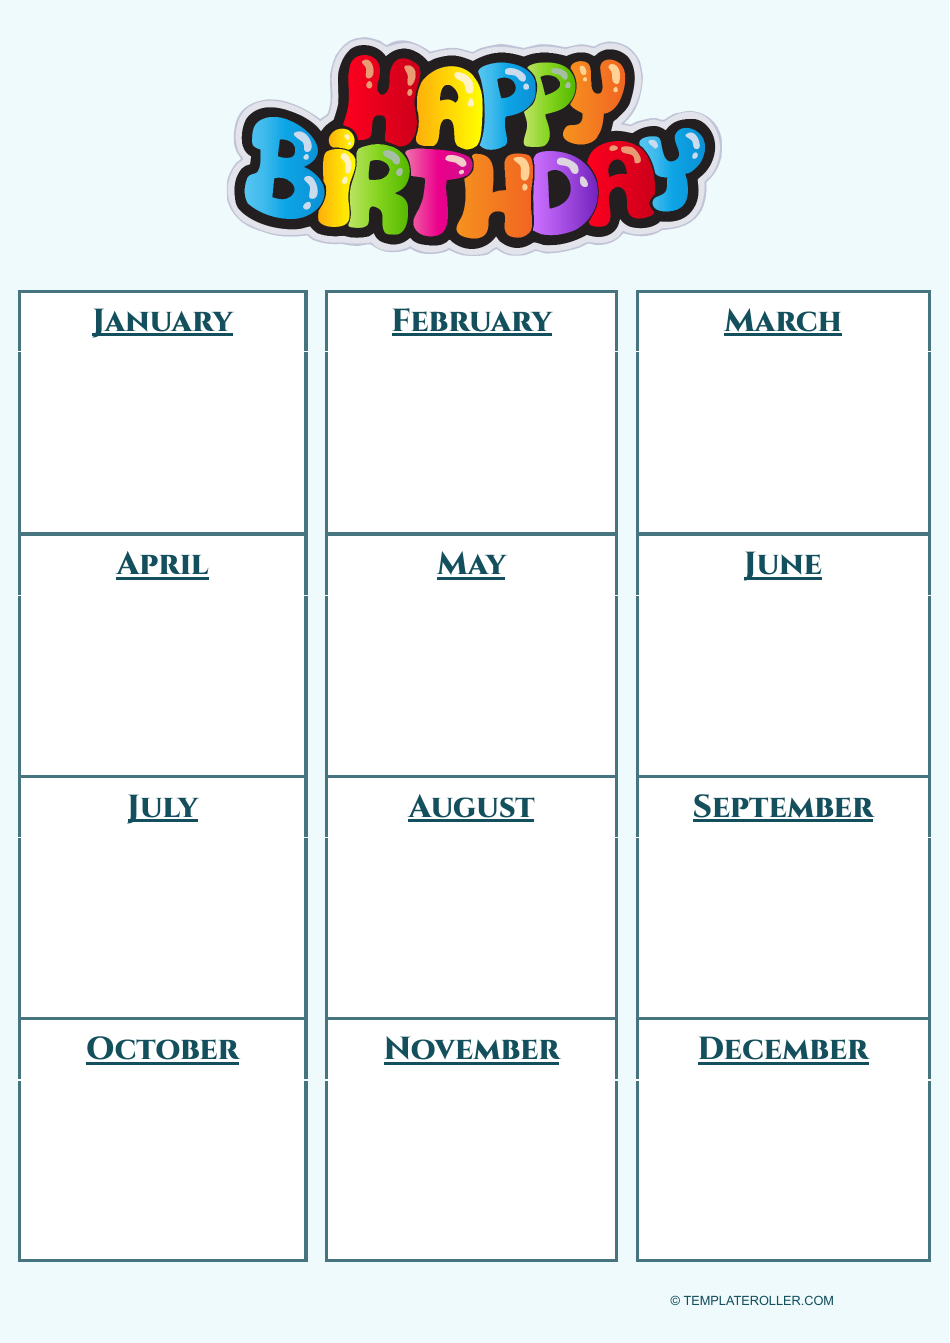 Birthday Calendar Template - Varicolored, Page 1